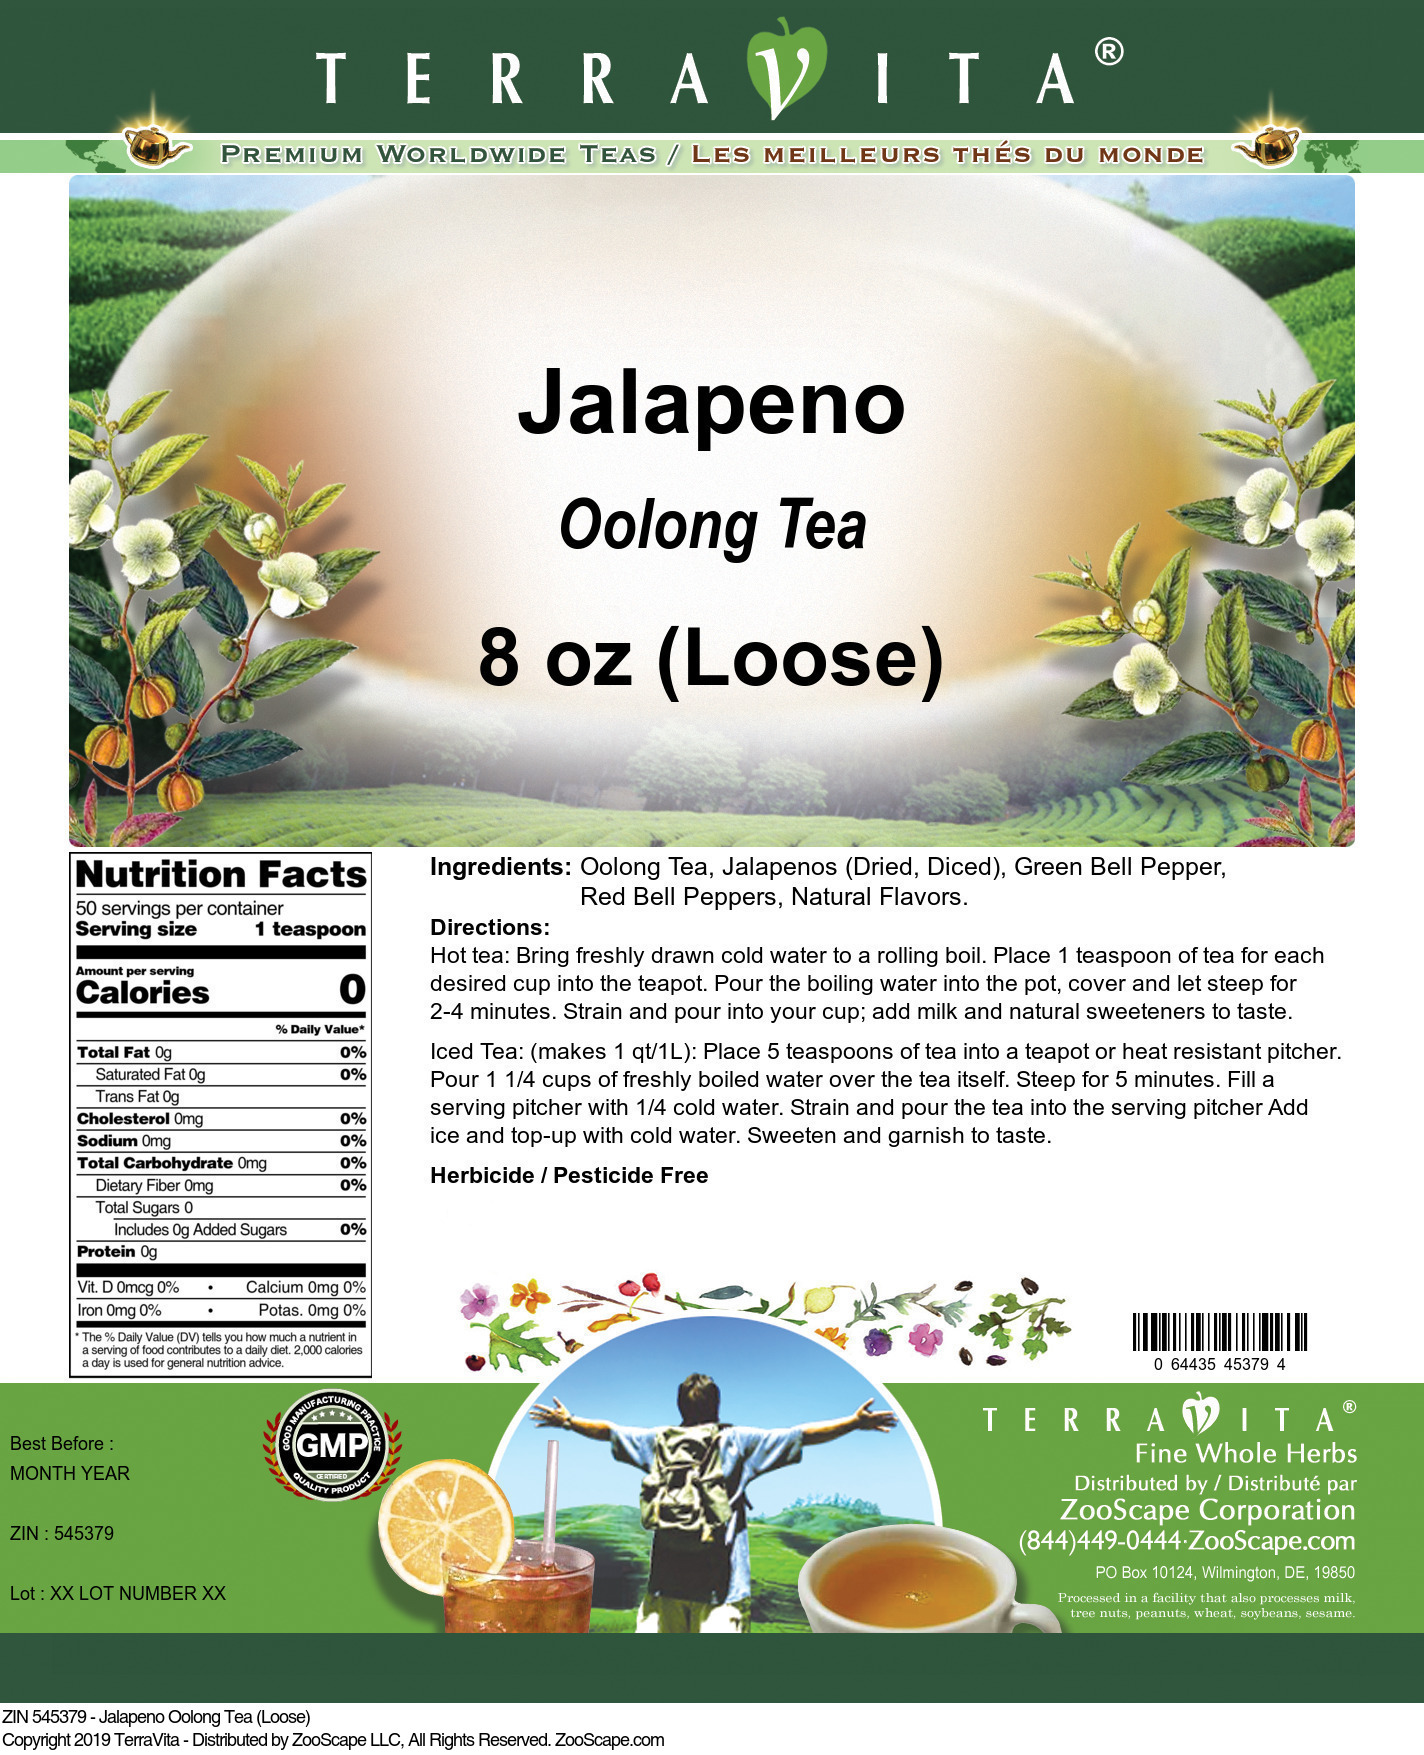 Jalapeno Oolong Tea (Loose) - Label